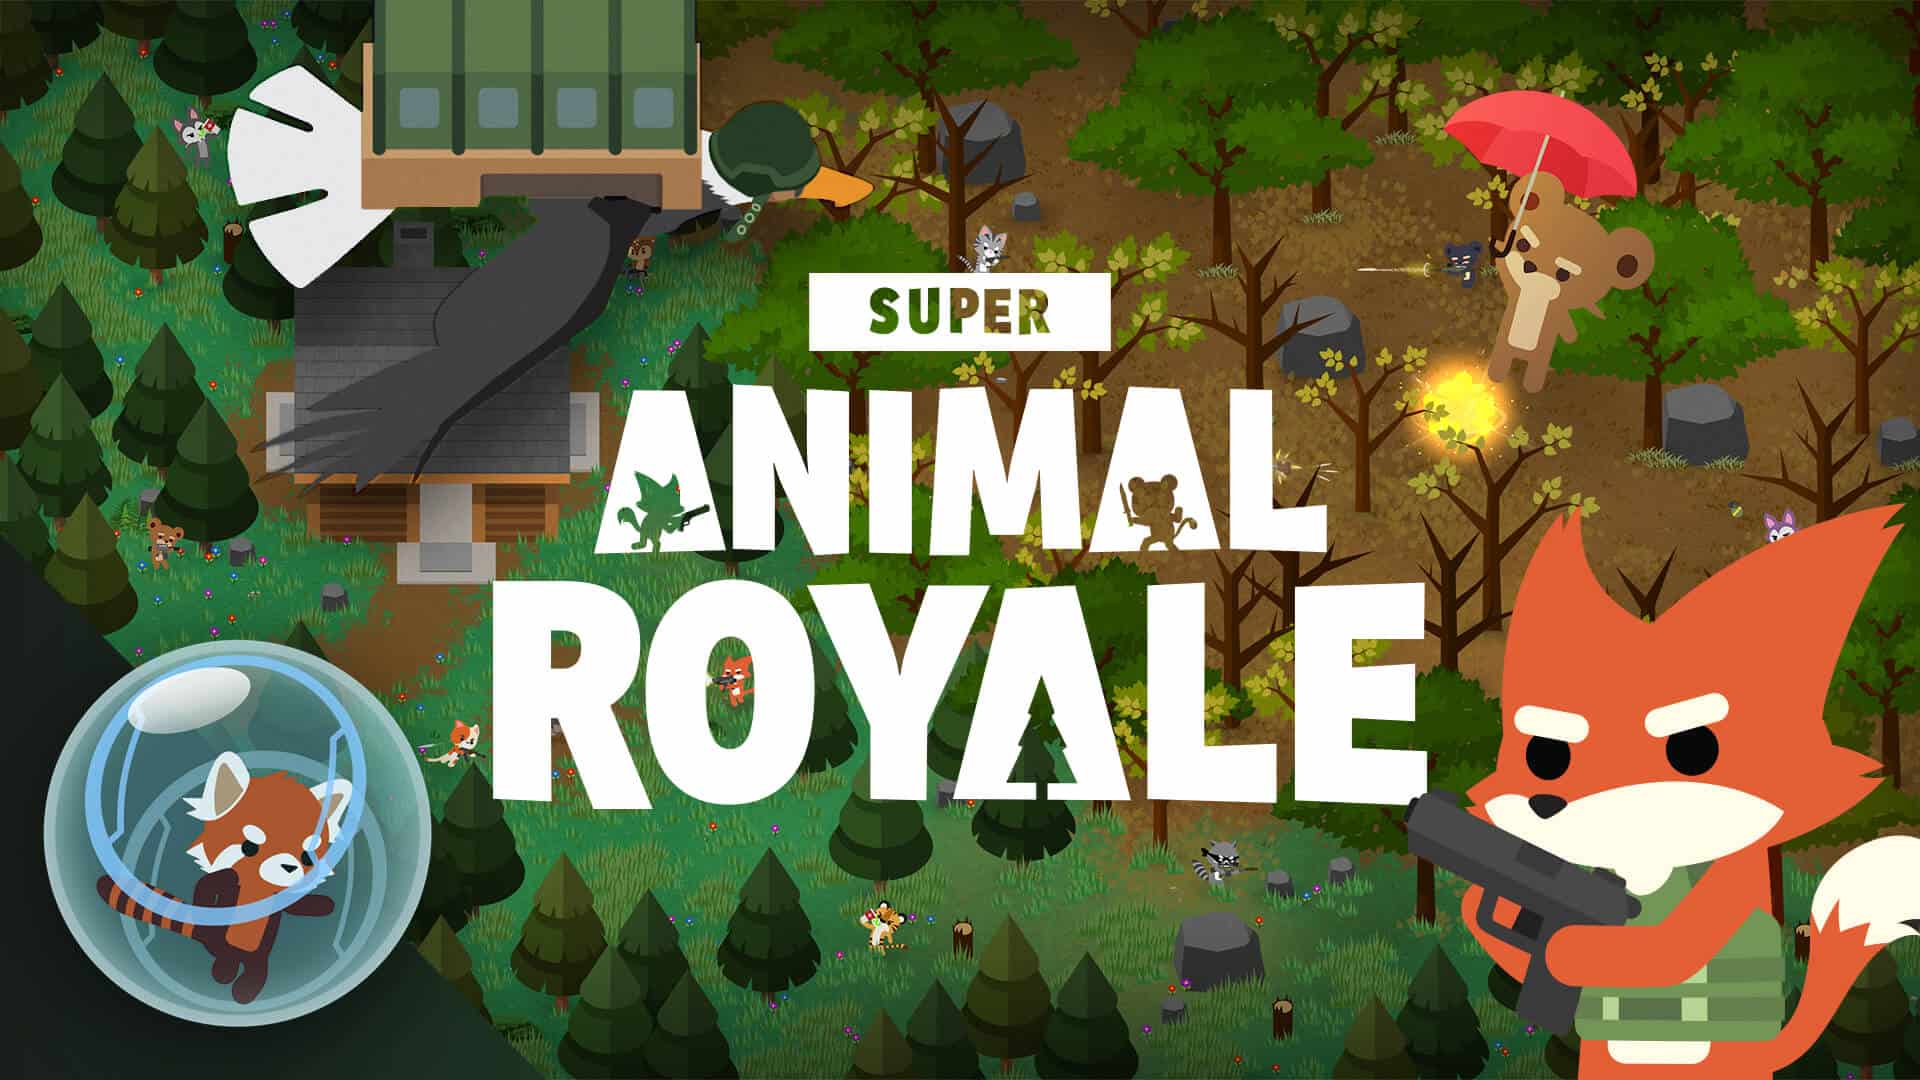 Super Animal Royale Game Wallpaper 75194 1920x1080px